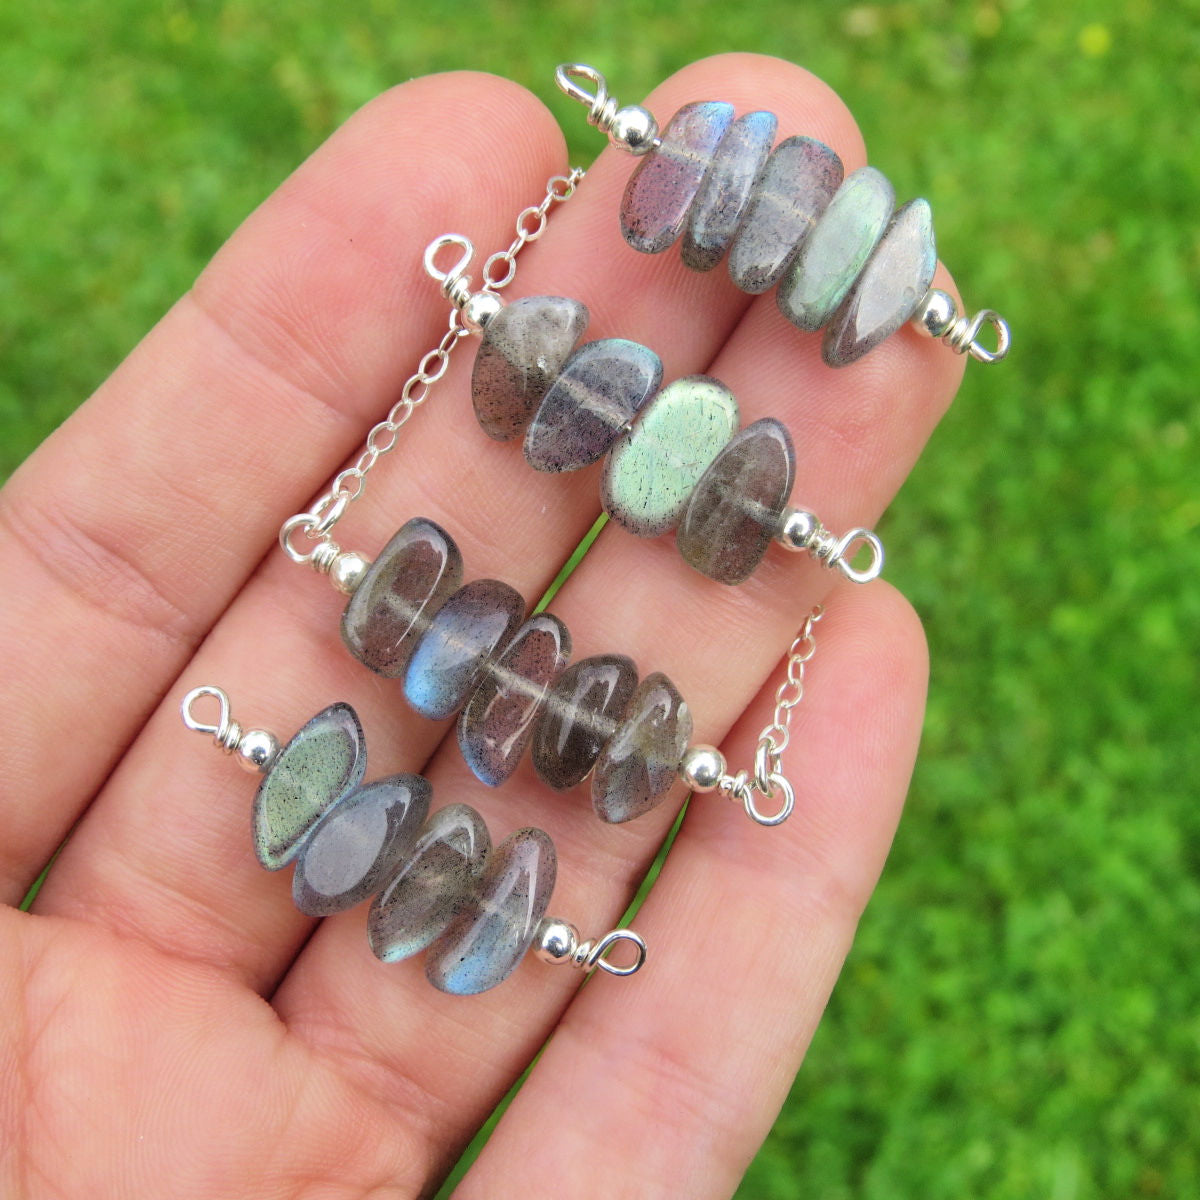 Labradorite Crystal Necklaces in Sterling Silver  - Labradorite Jewelry